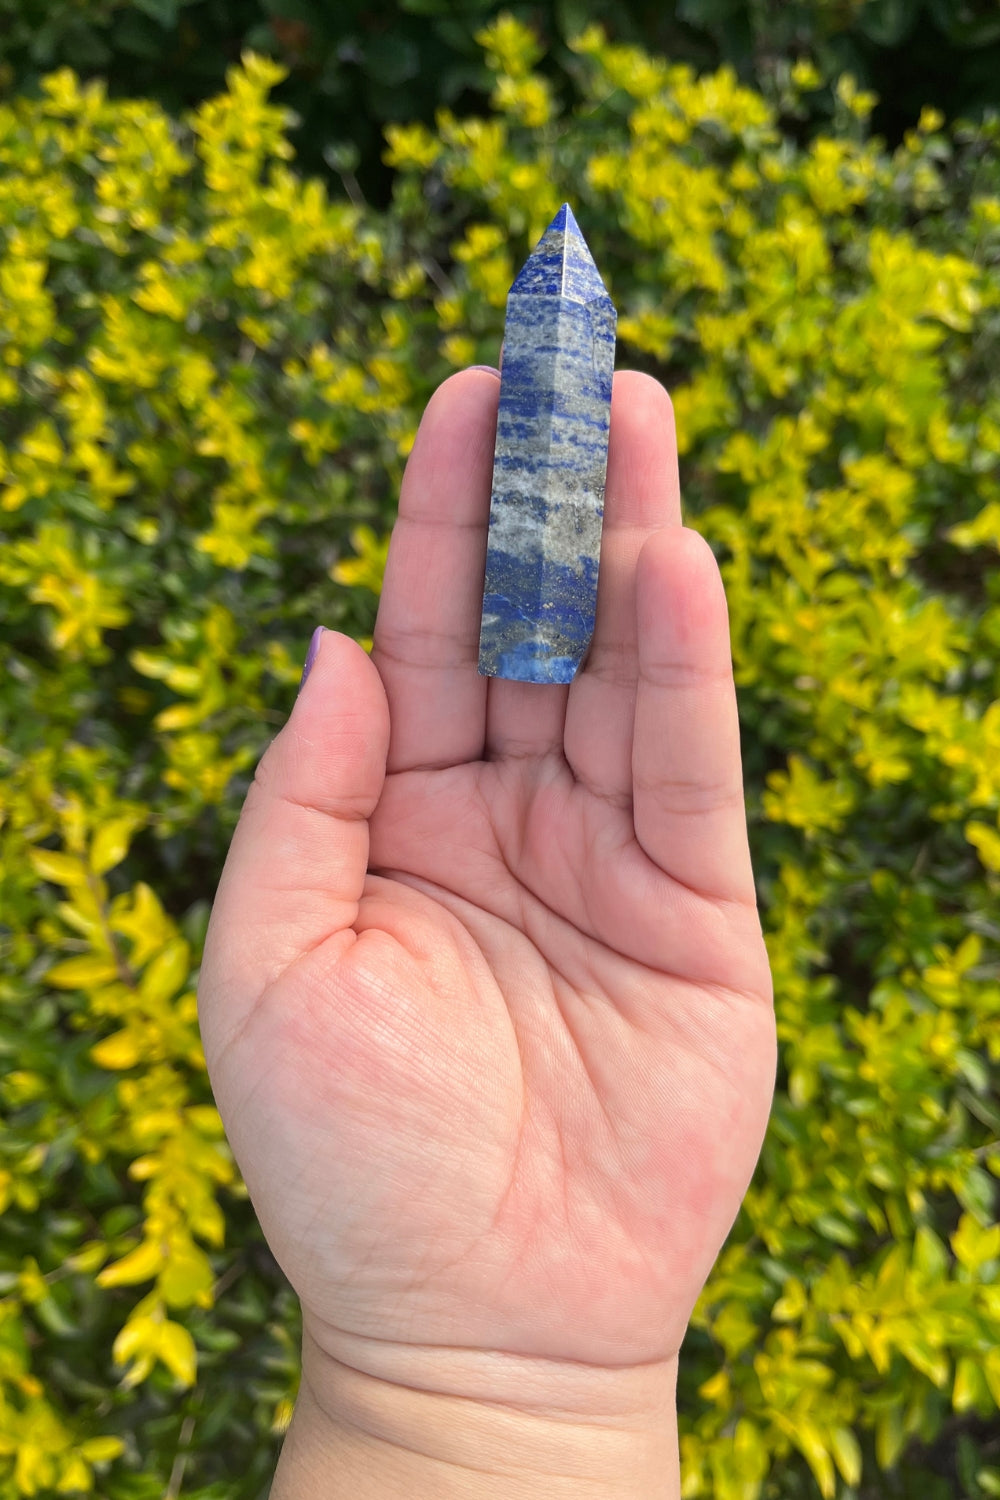 Lapis Lazuli Tower #2